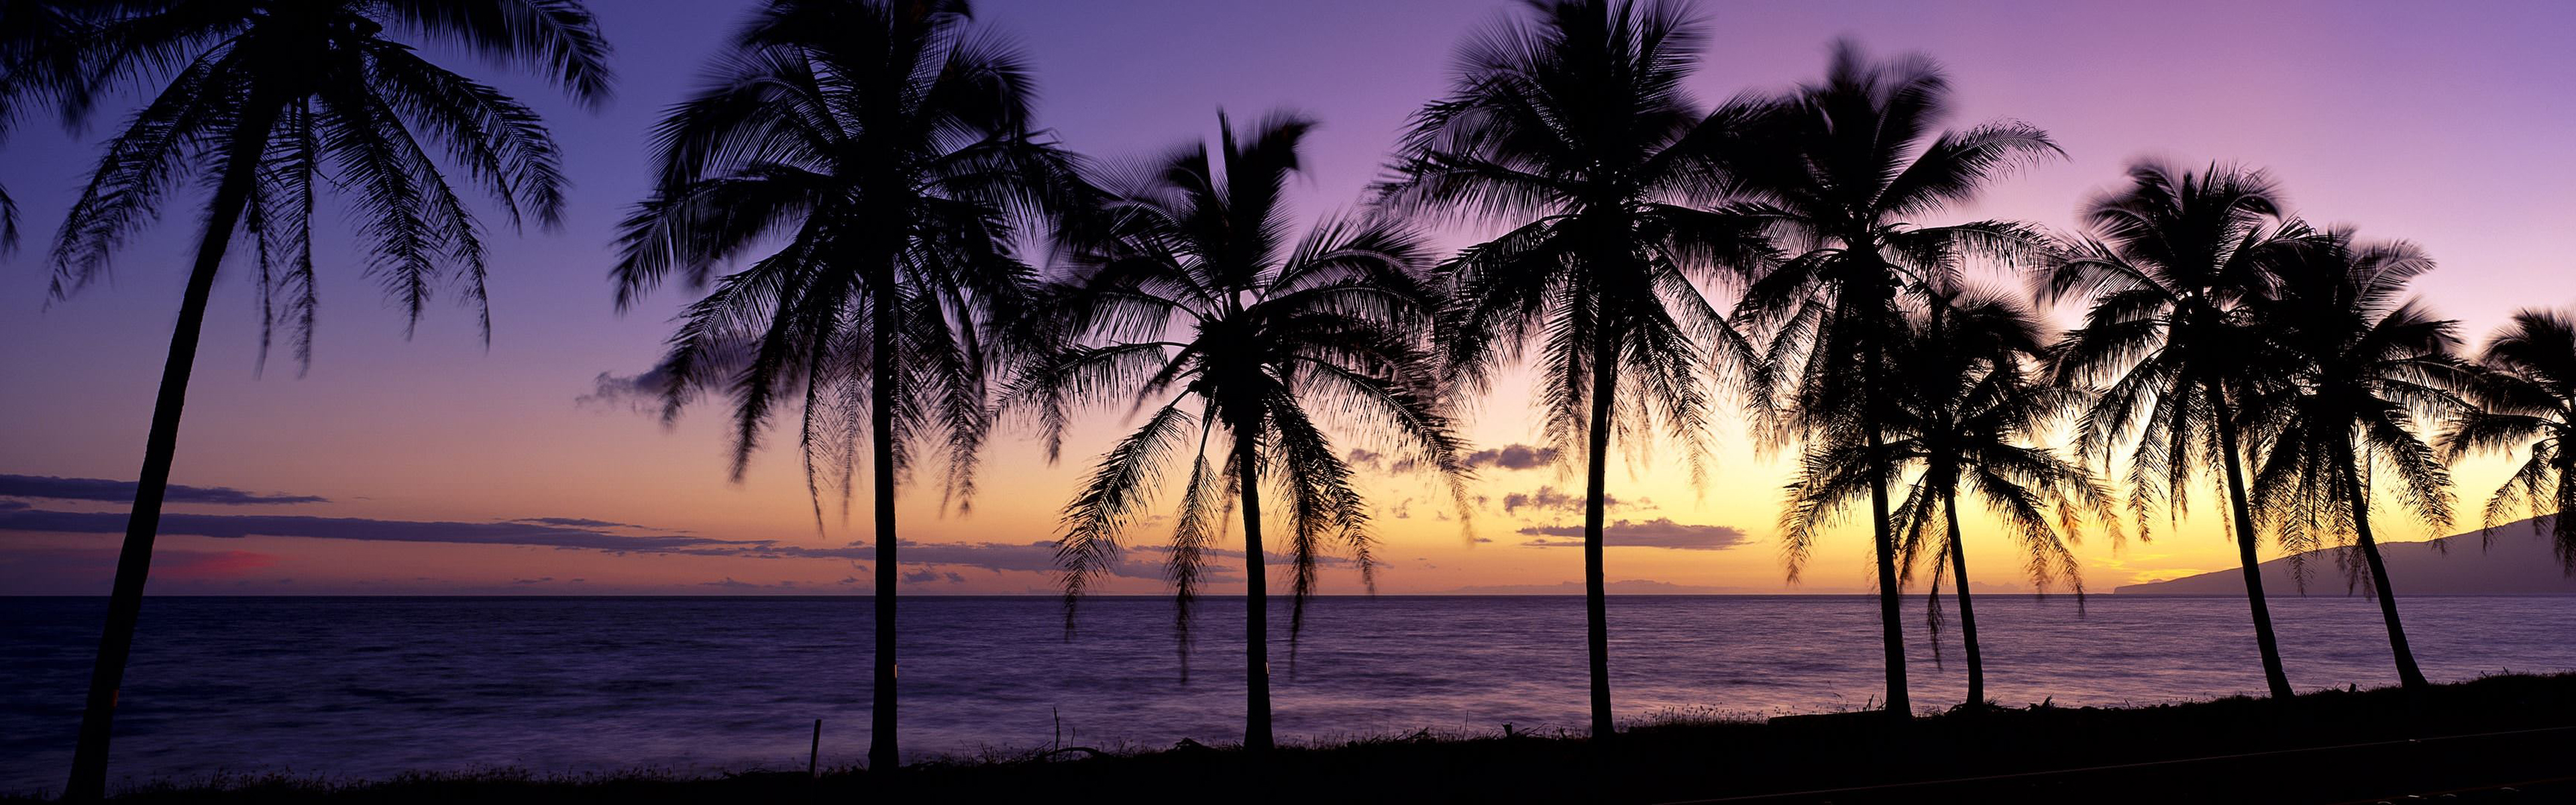 General 3840x1200 beach landscape sunset sunrise palm trees sea dusk nature